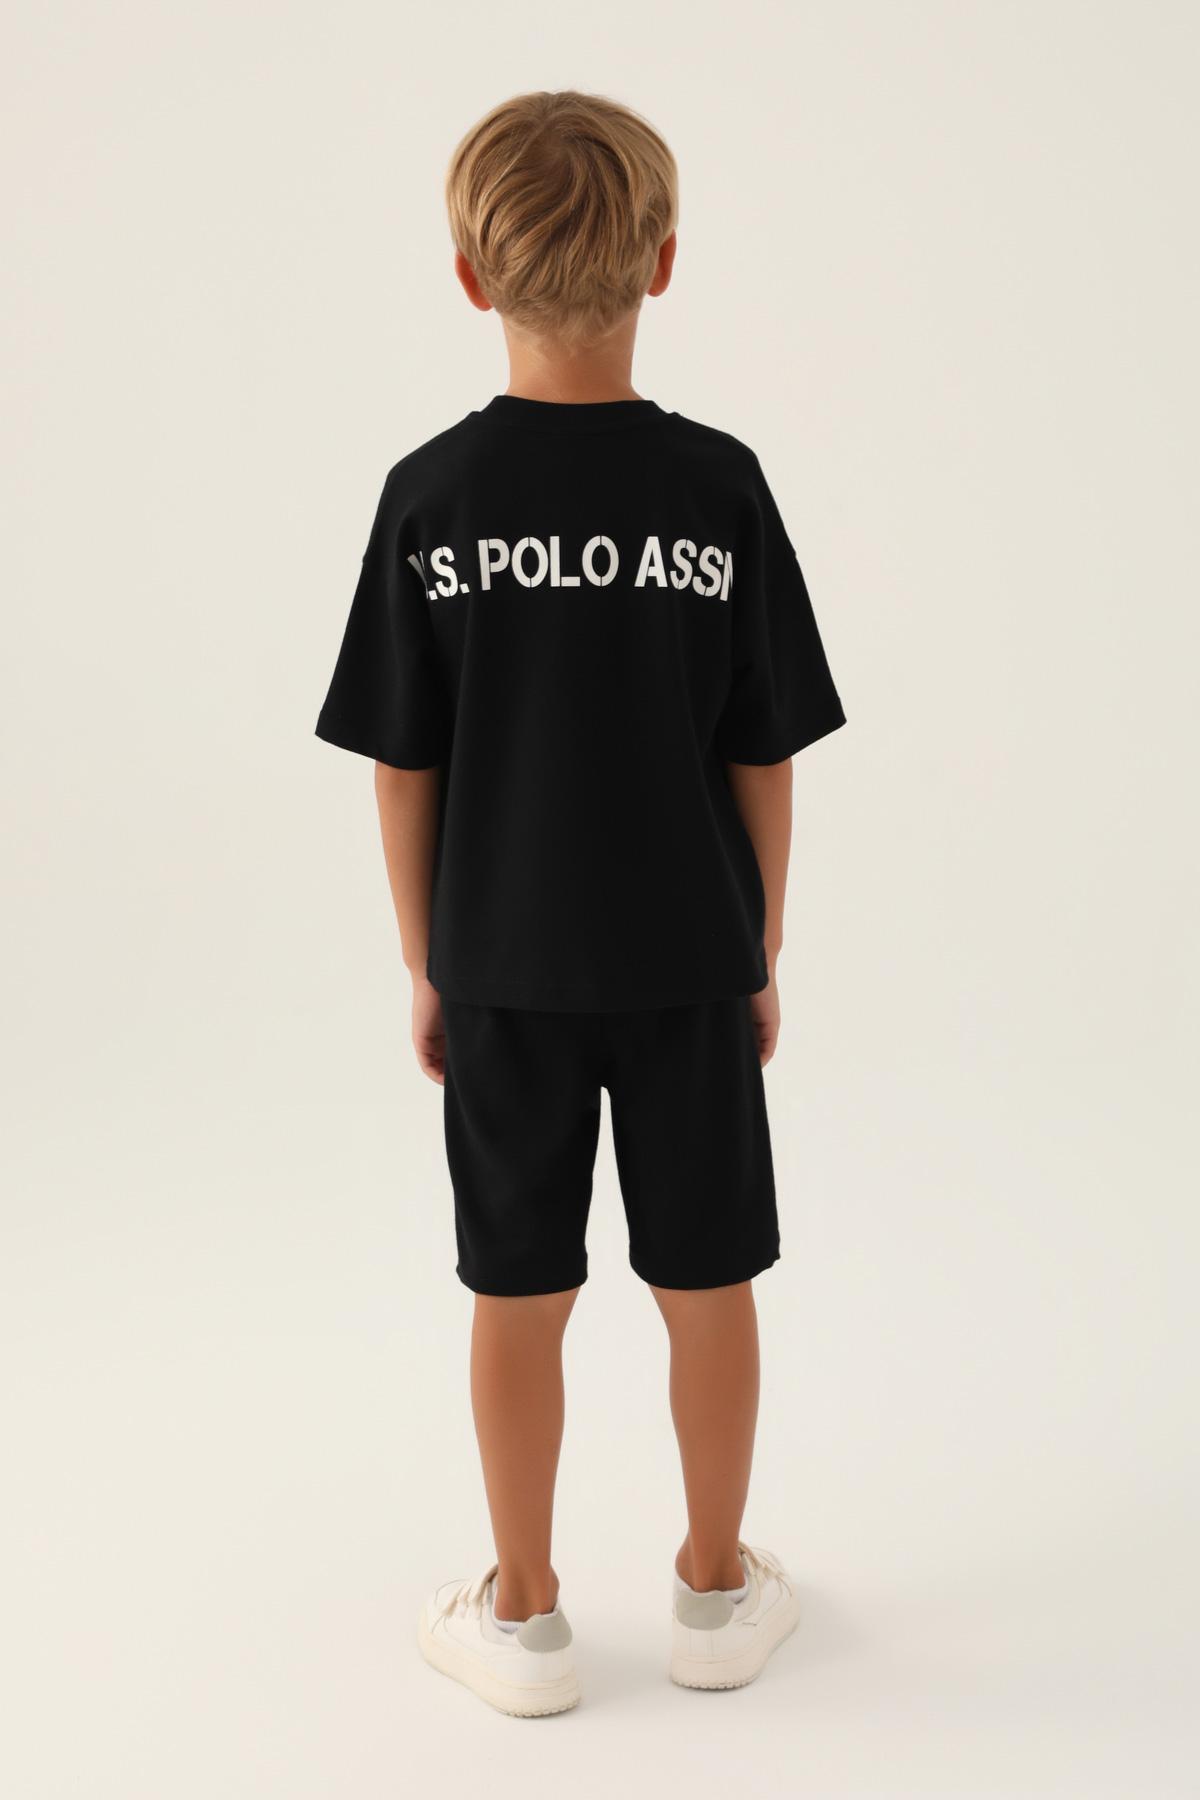 Selected image for U.S. Polo Assn. Komplet za dečake US1774-G, Crni